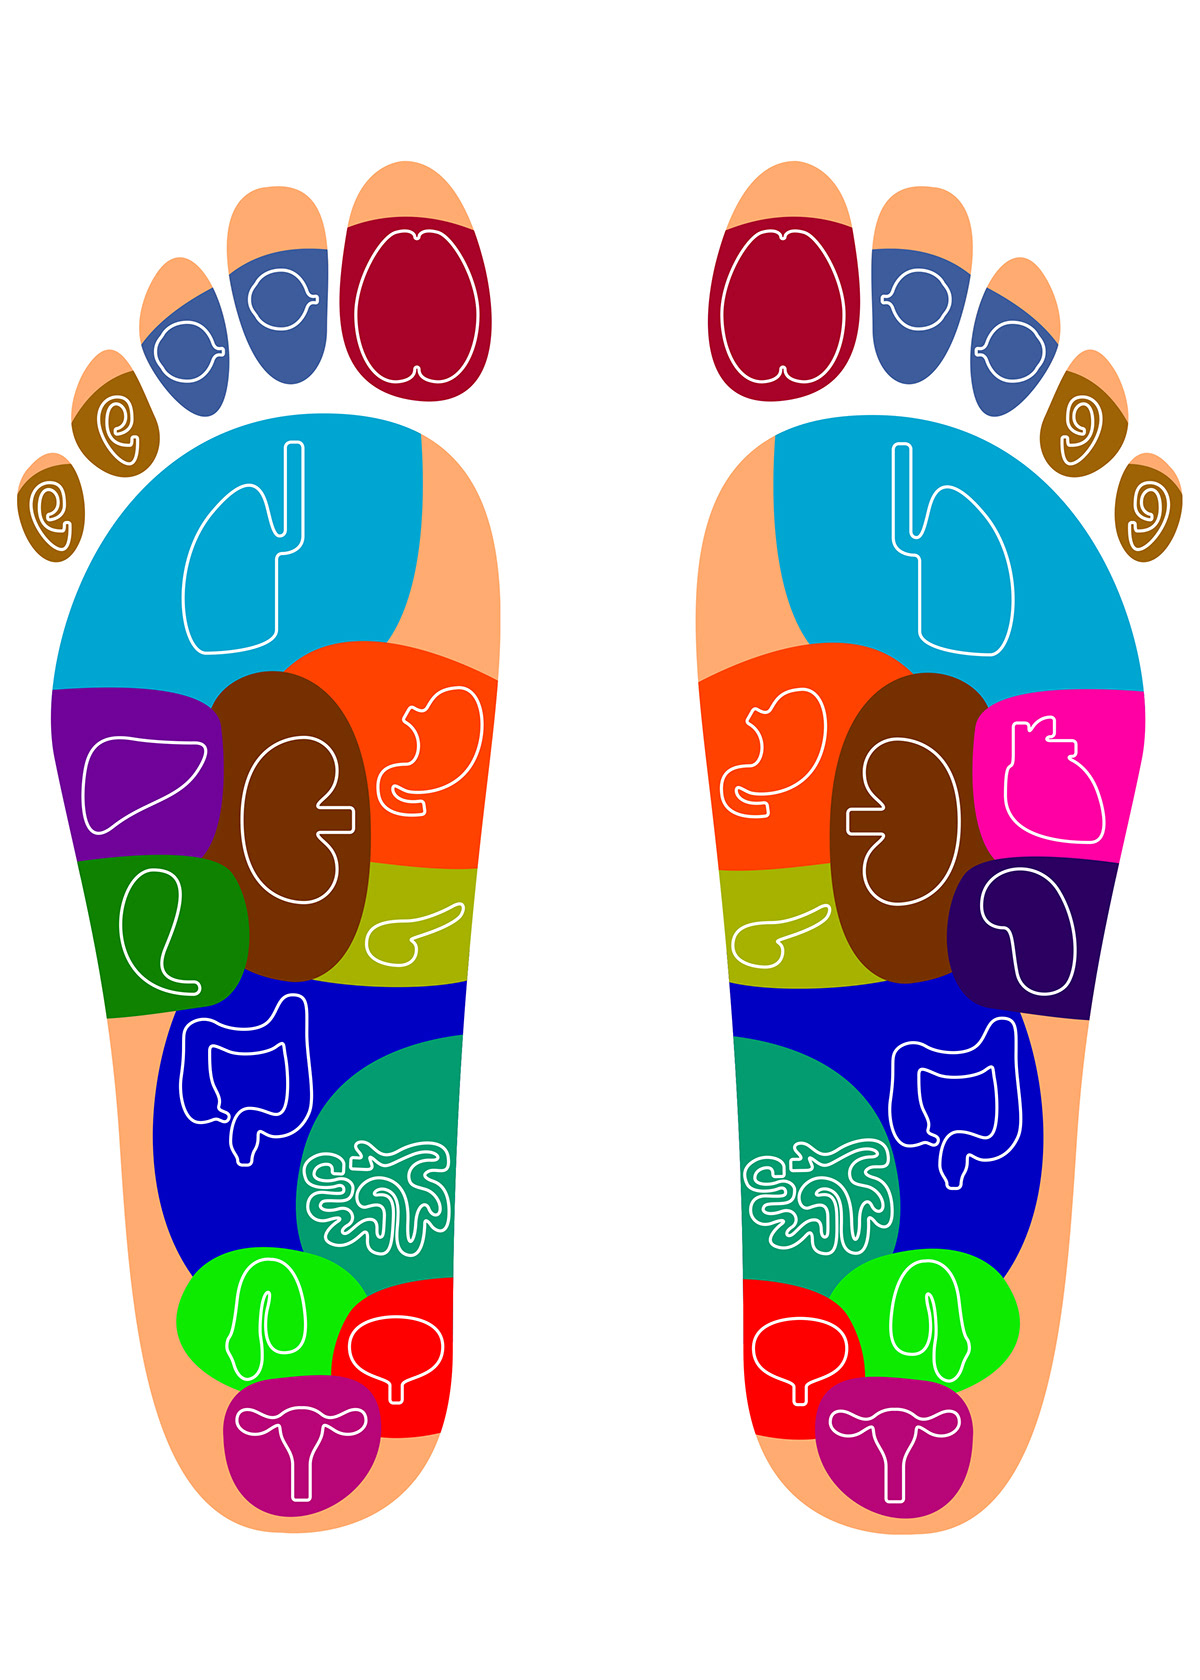 reflexology bodily organs Human Body reflexes map acupuncture feet